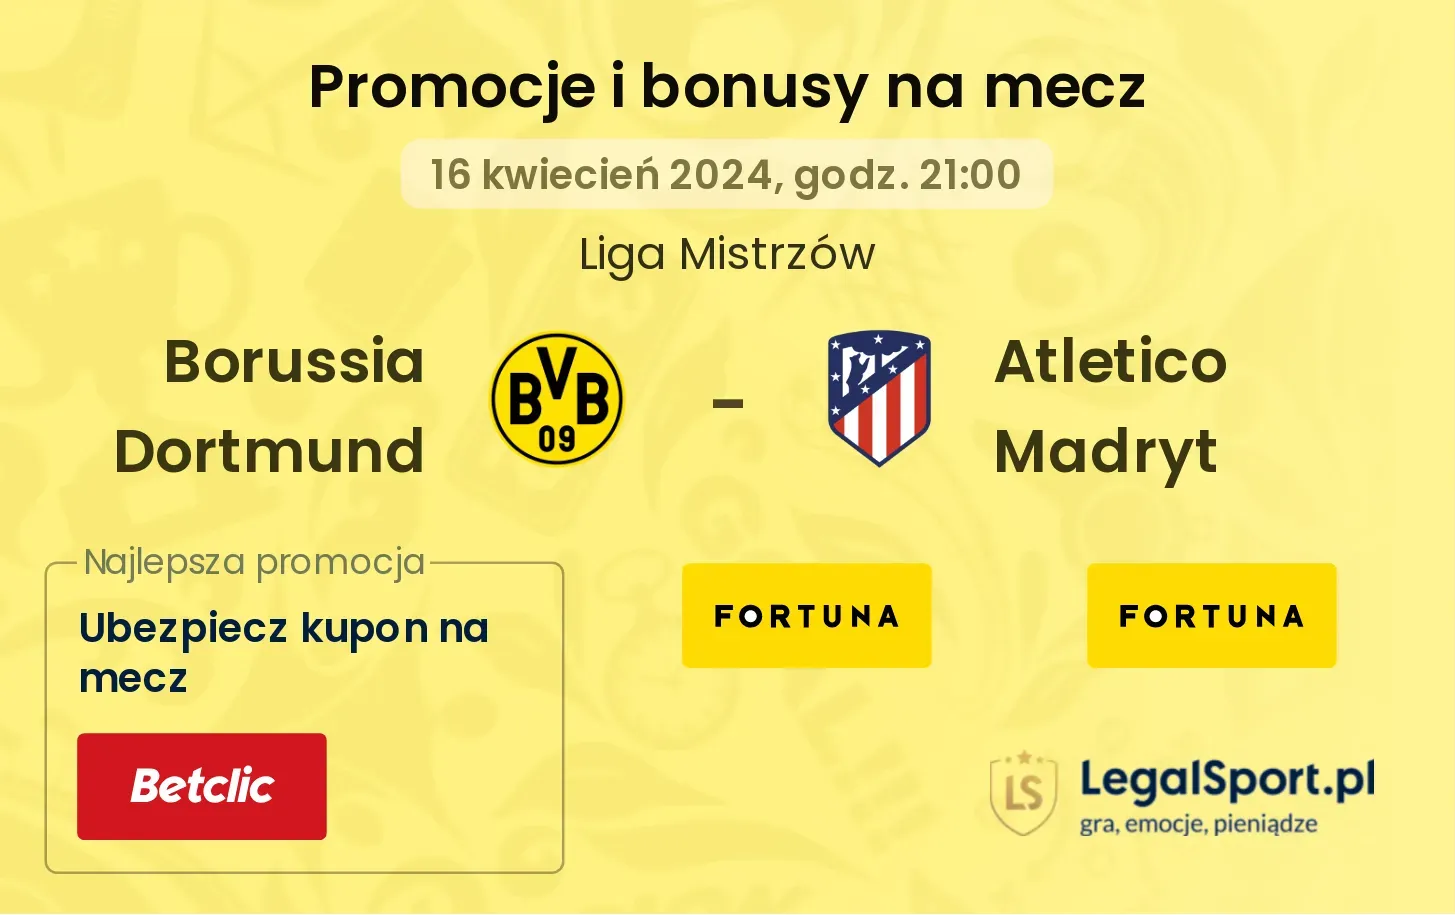 Borussia Dortmund - Atletico Madryt promocje bonusy na mecz